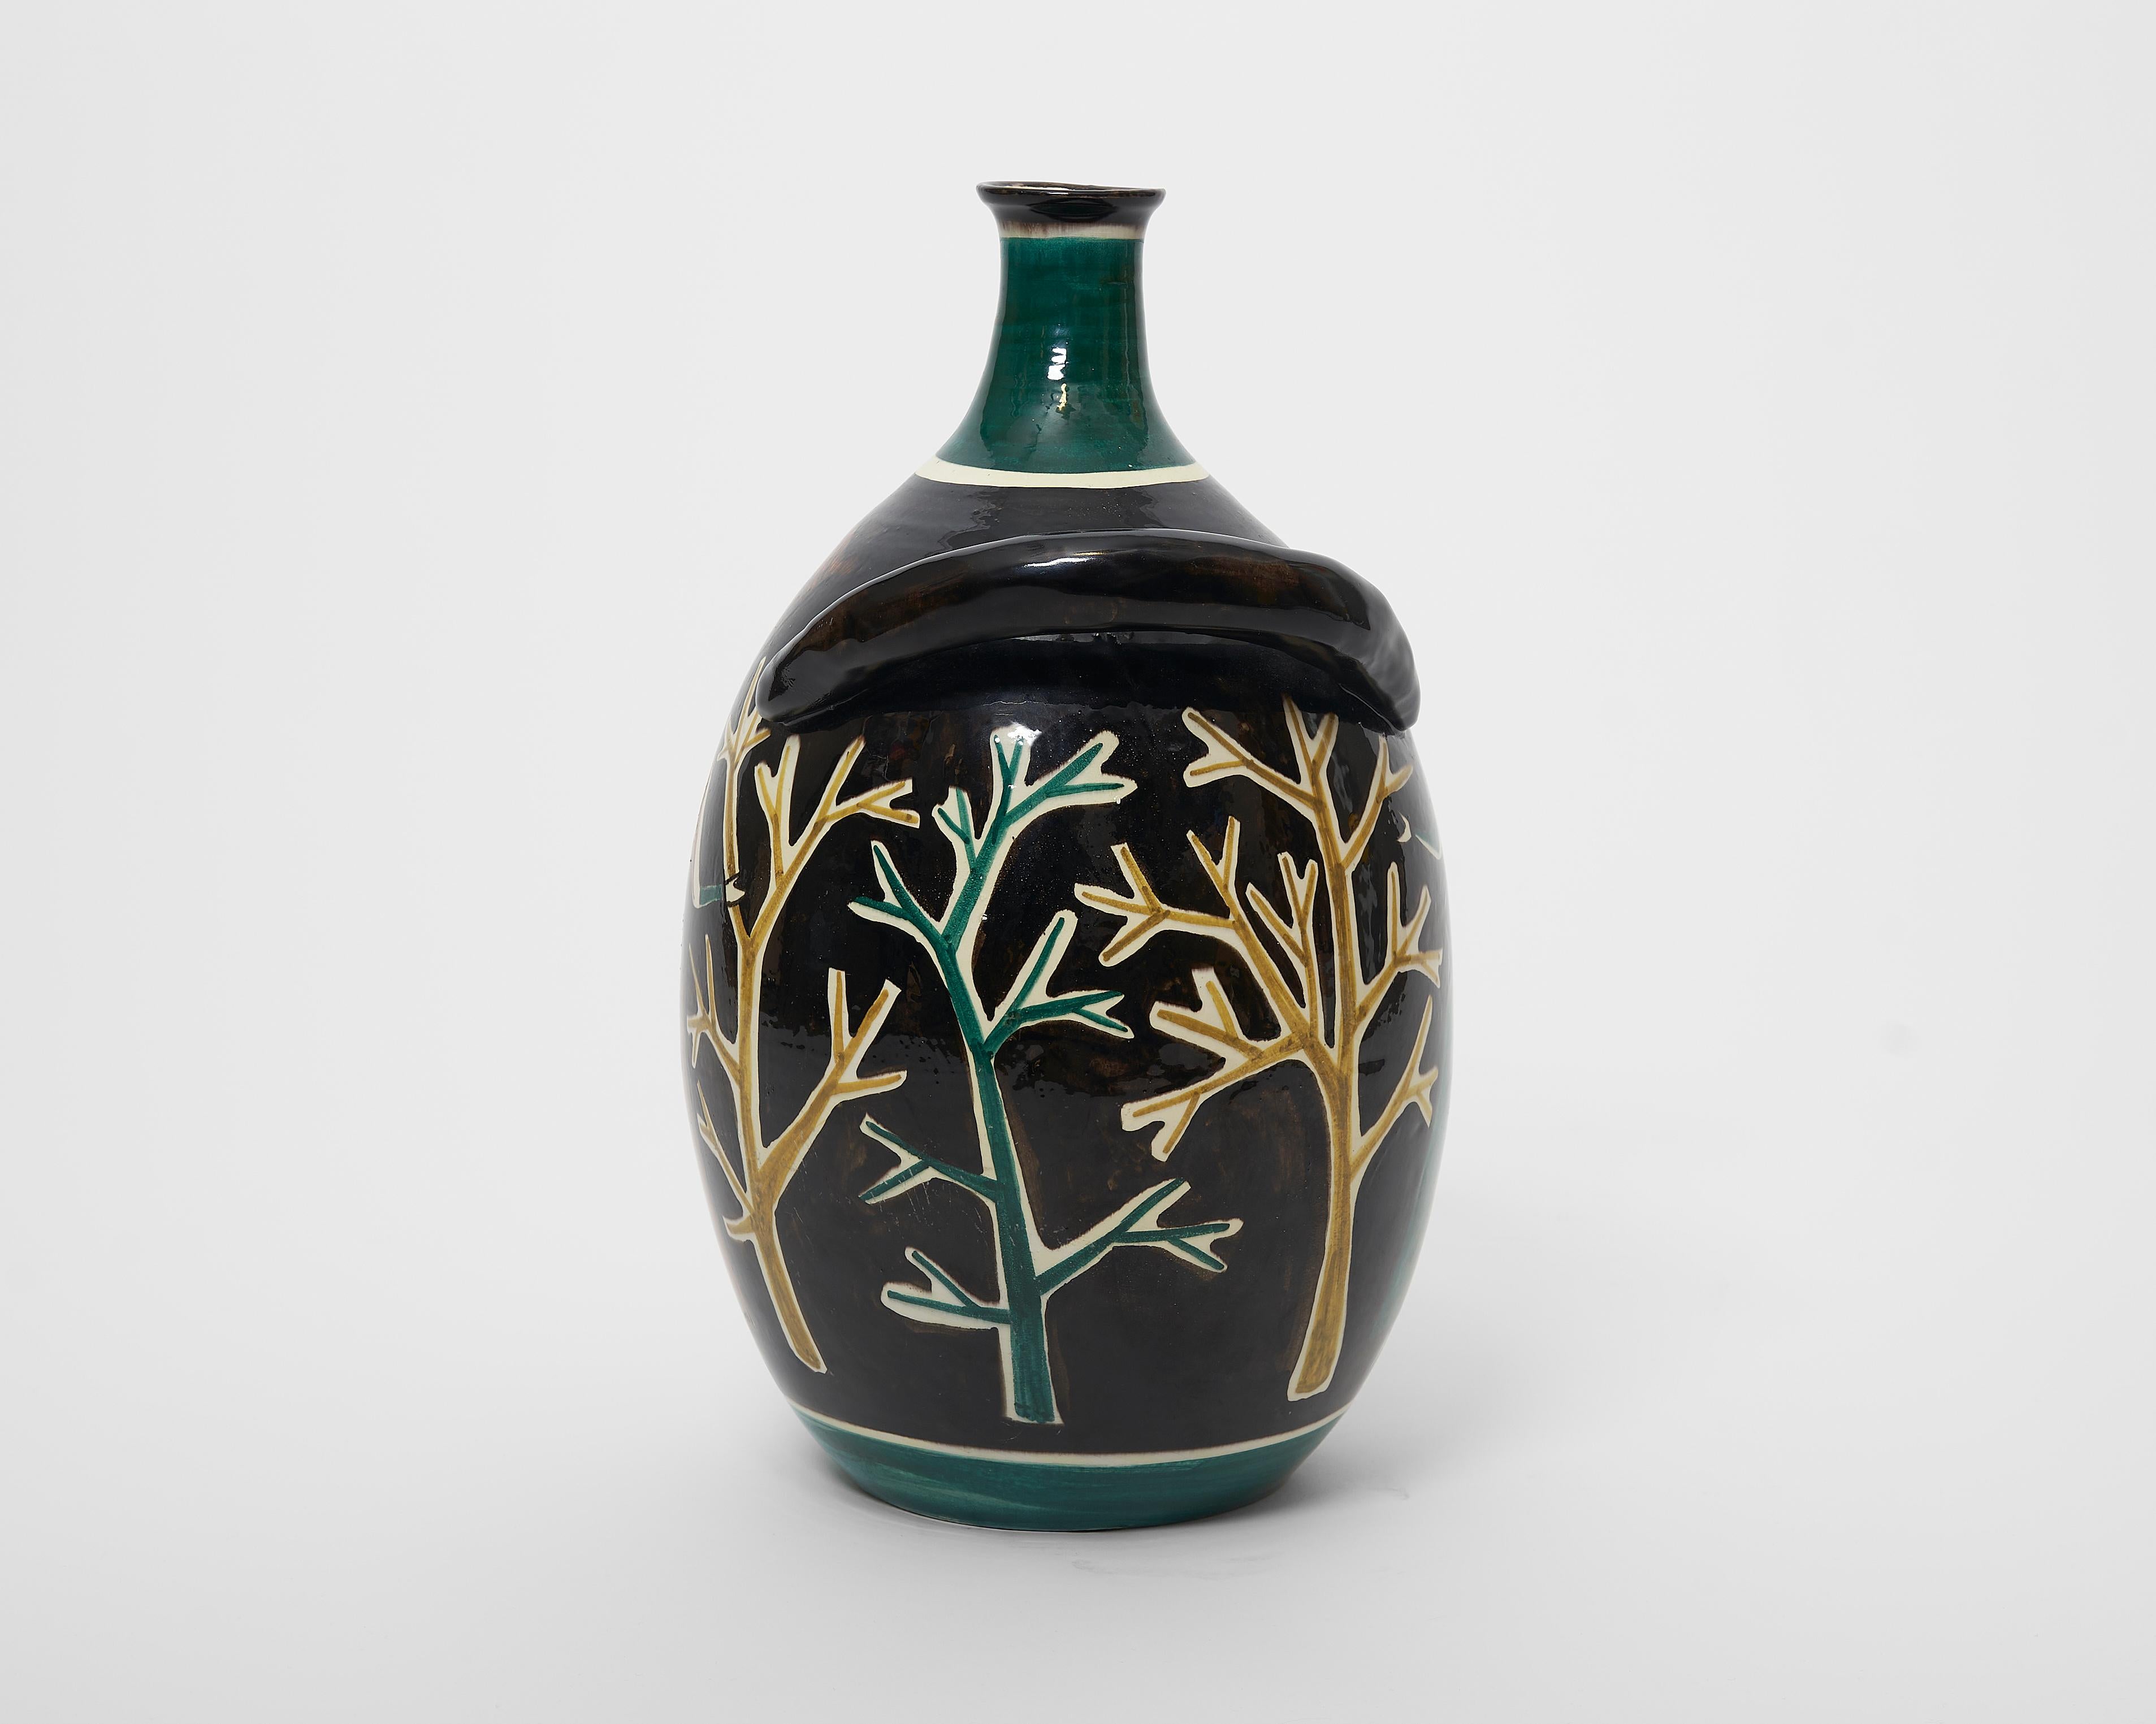 Painted Ceramic Vase Amphora
Anonymous